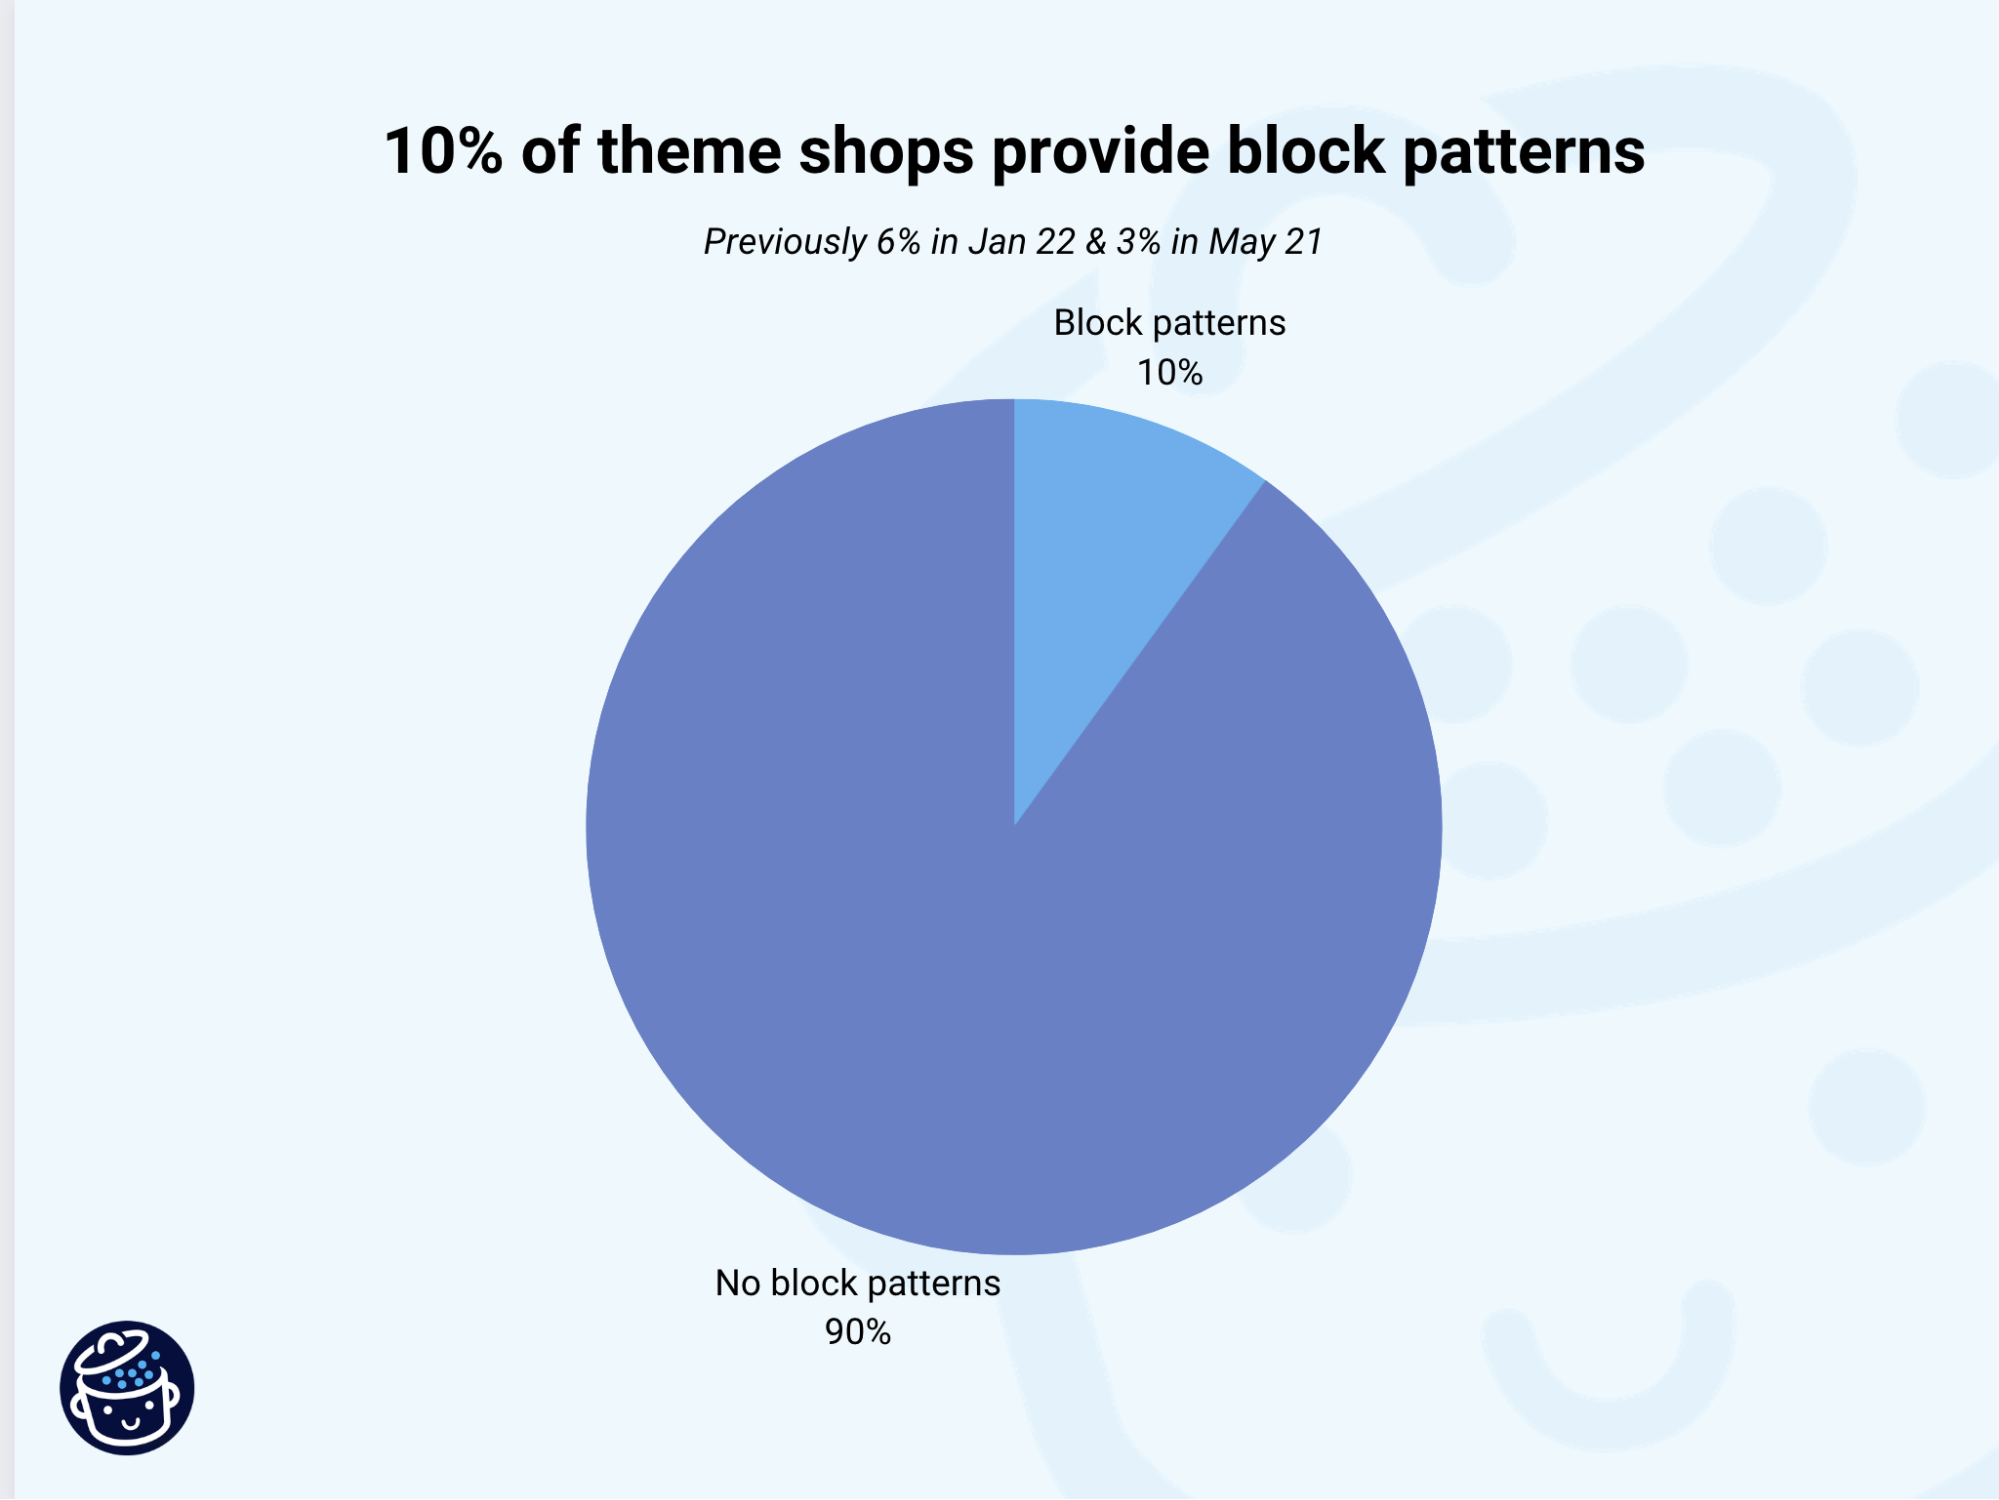 WordPress theme shops providing Gutenberg block patterns.